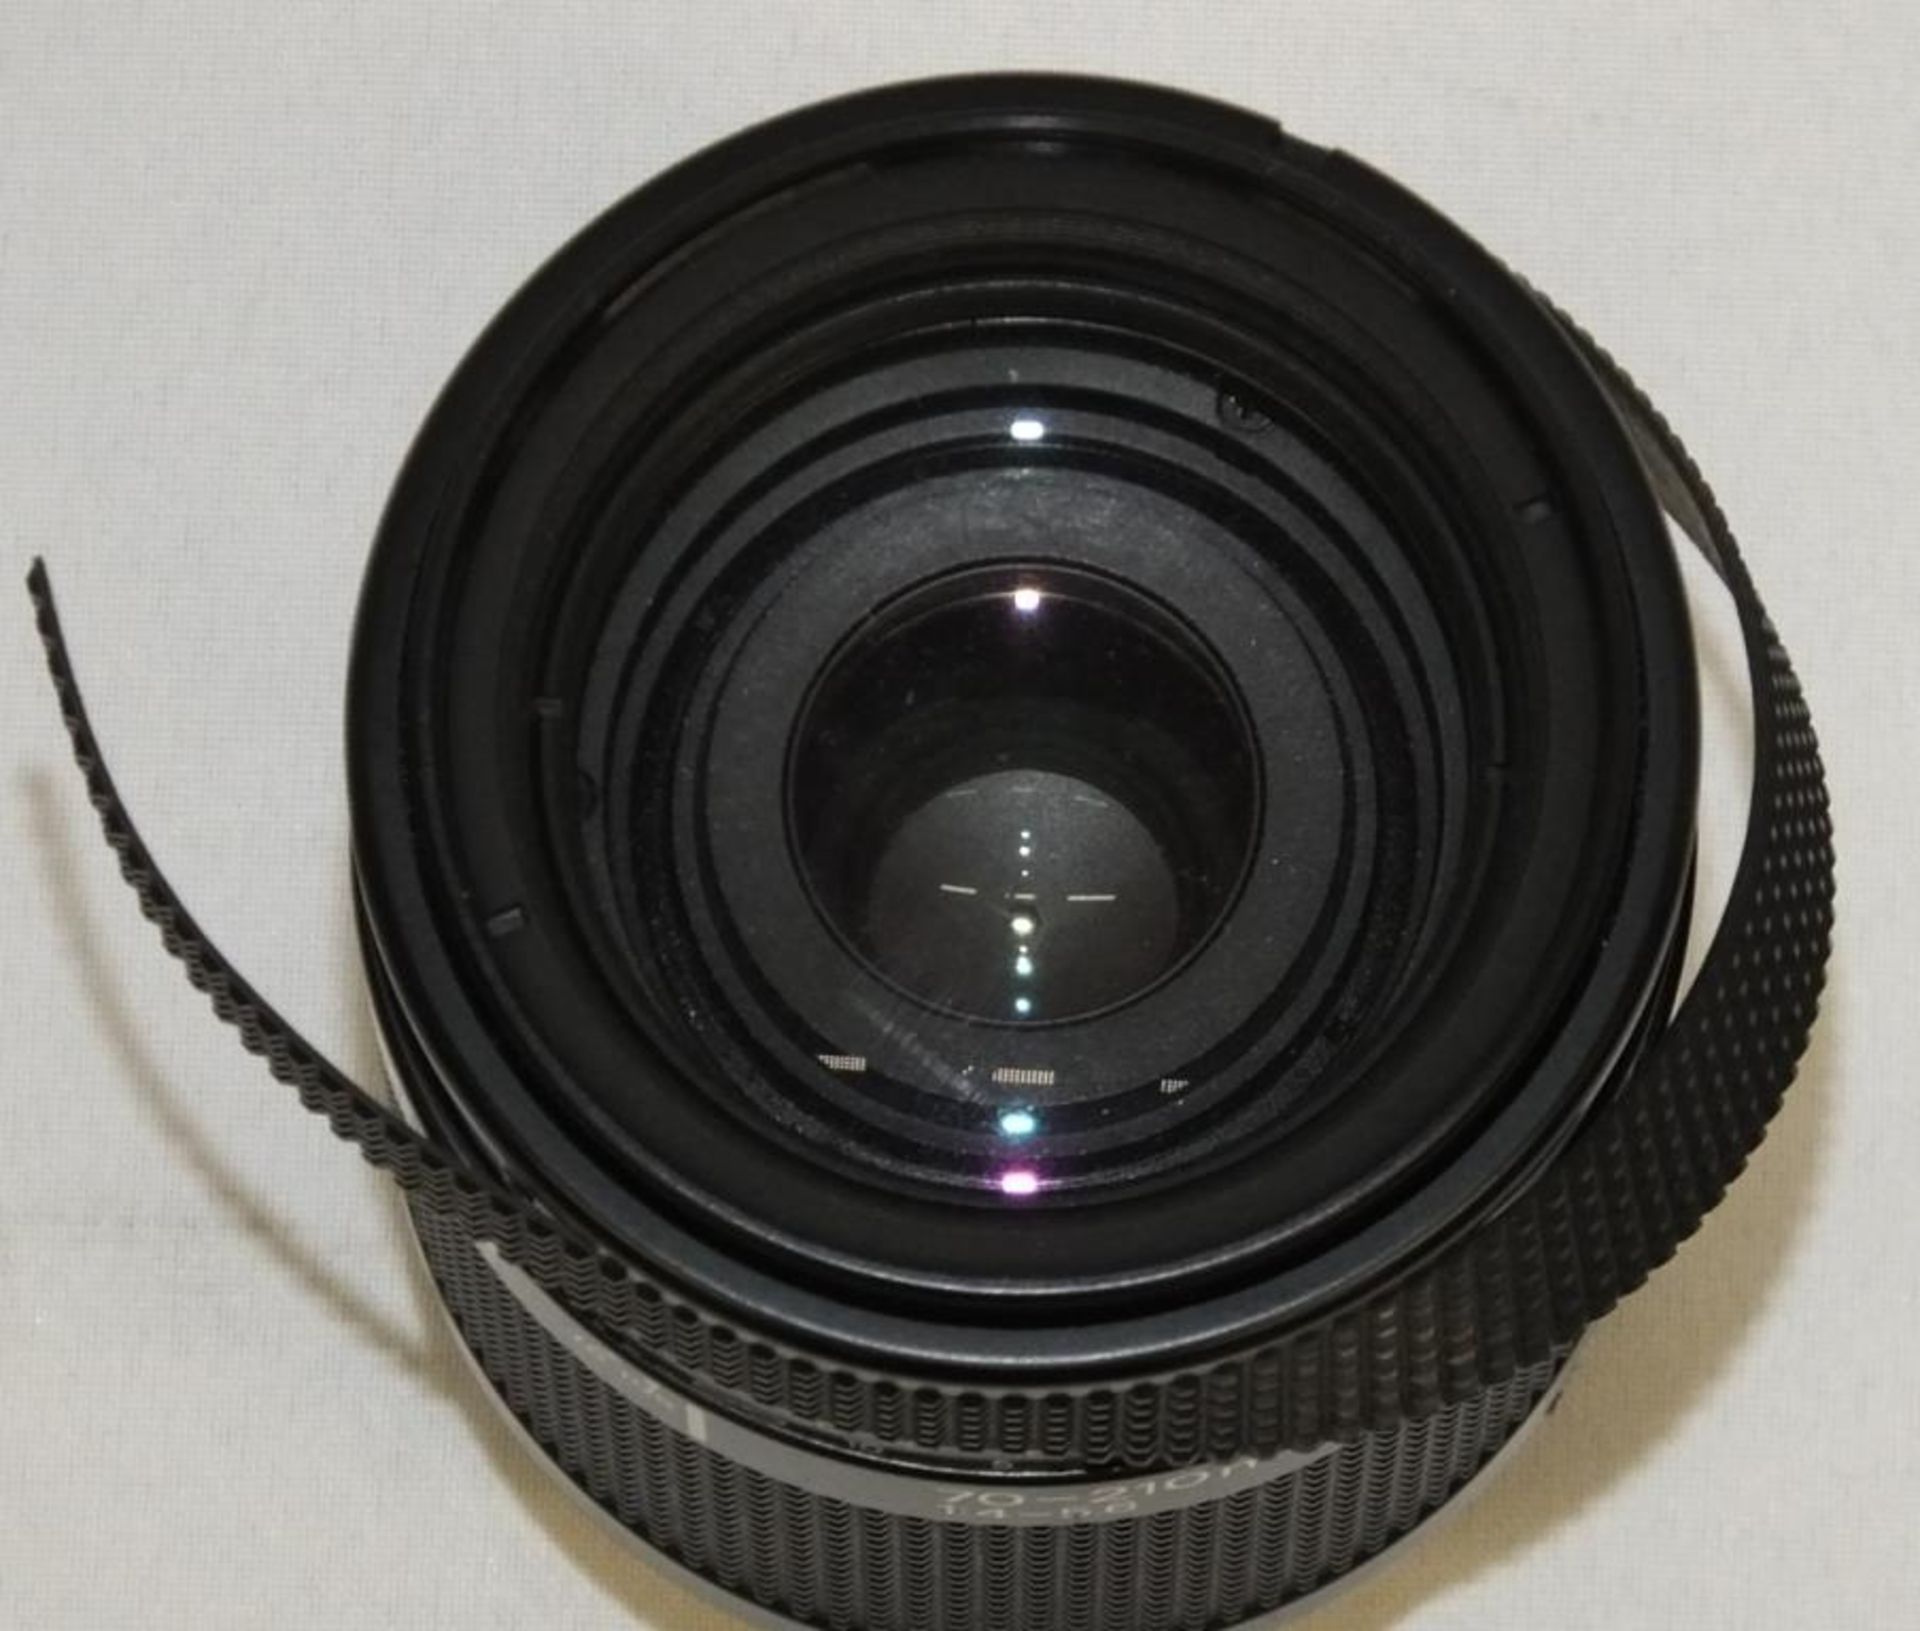 Nikon AF Nikkor 70-210mm 1:4-5.6 Lens - Serial No. - 2432172 rubber grip coming away as seen in pics - Image 4 of 4